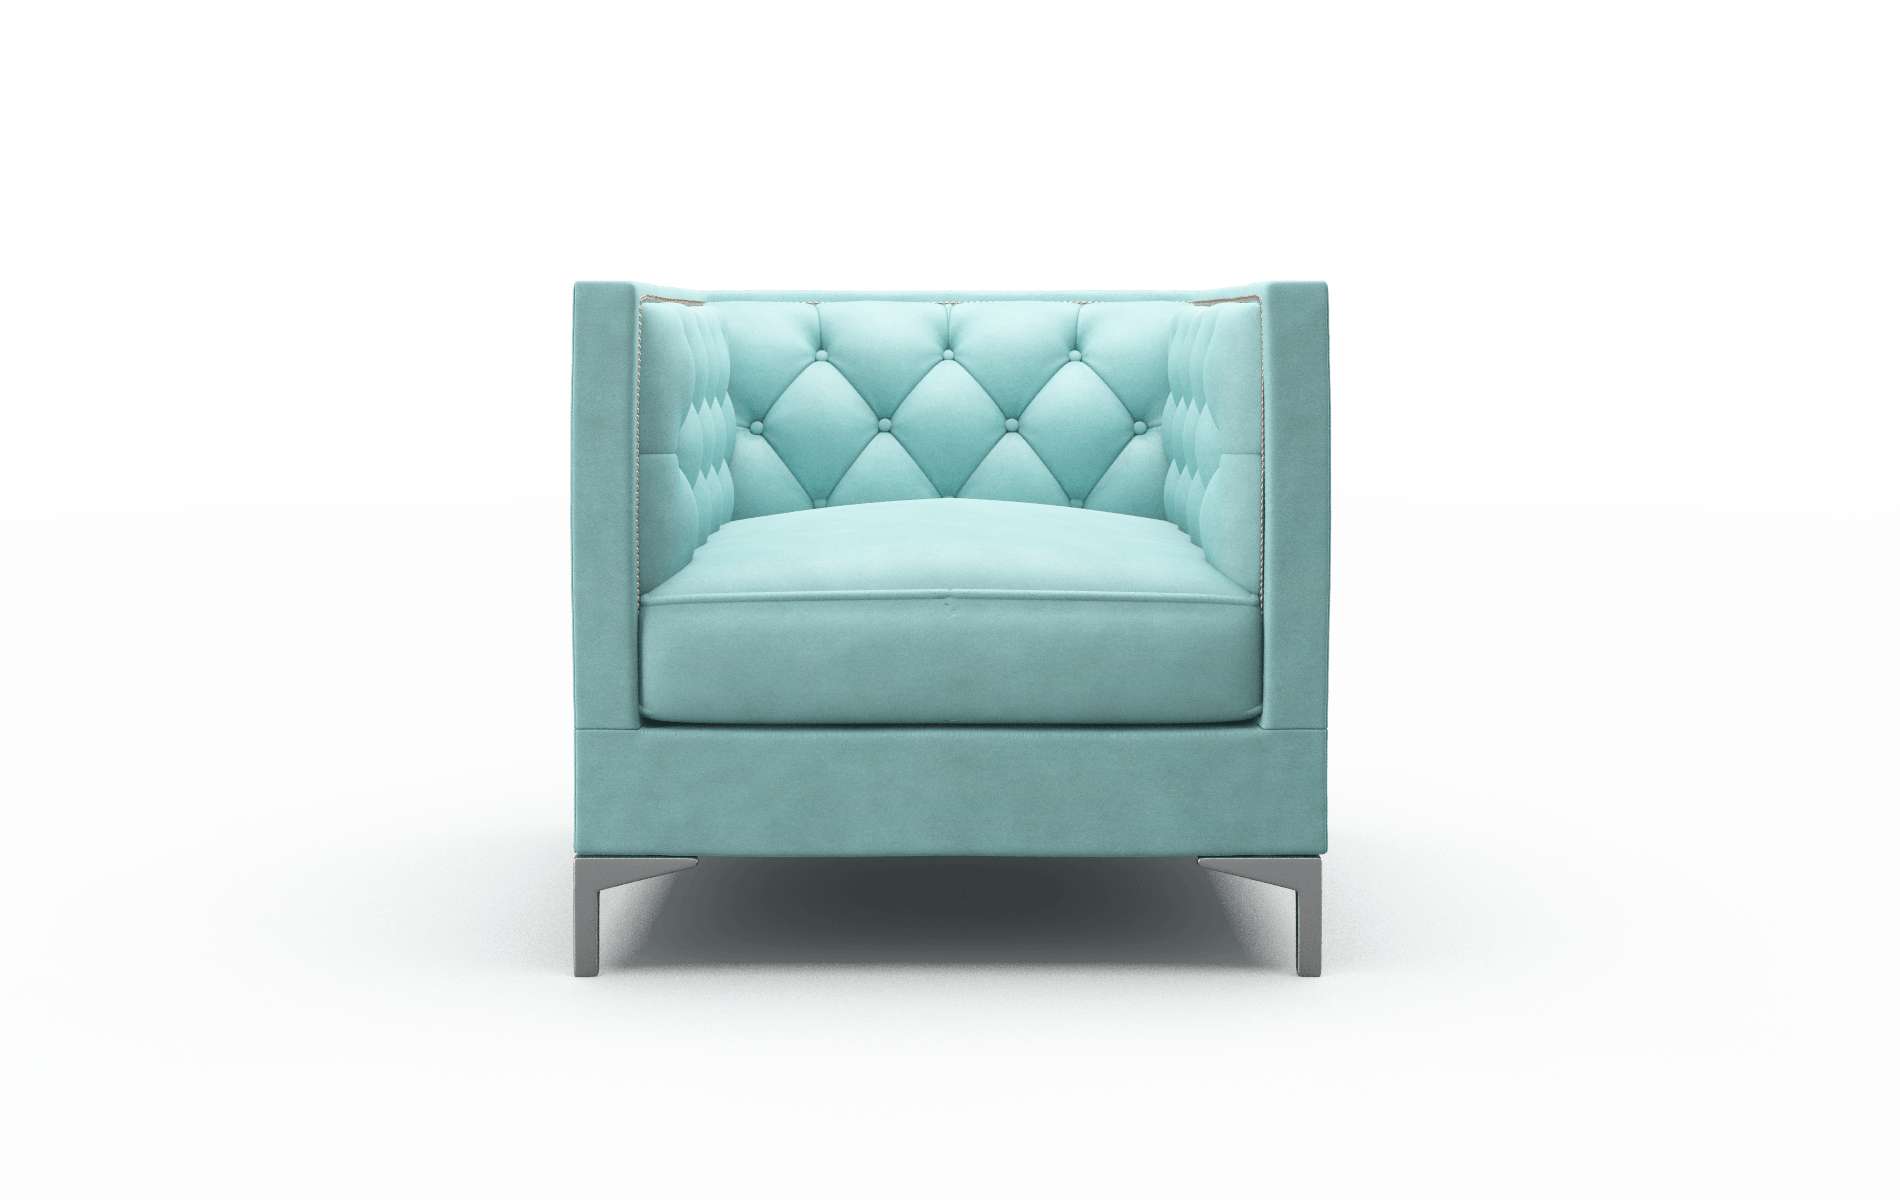 Gosford Curious Turquoise chair metal legs